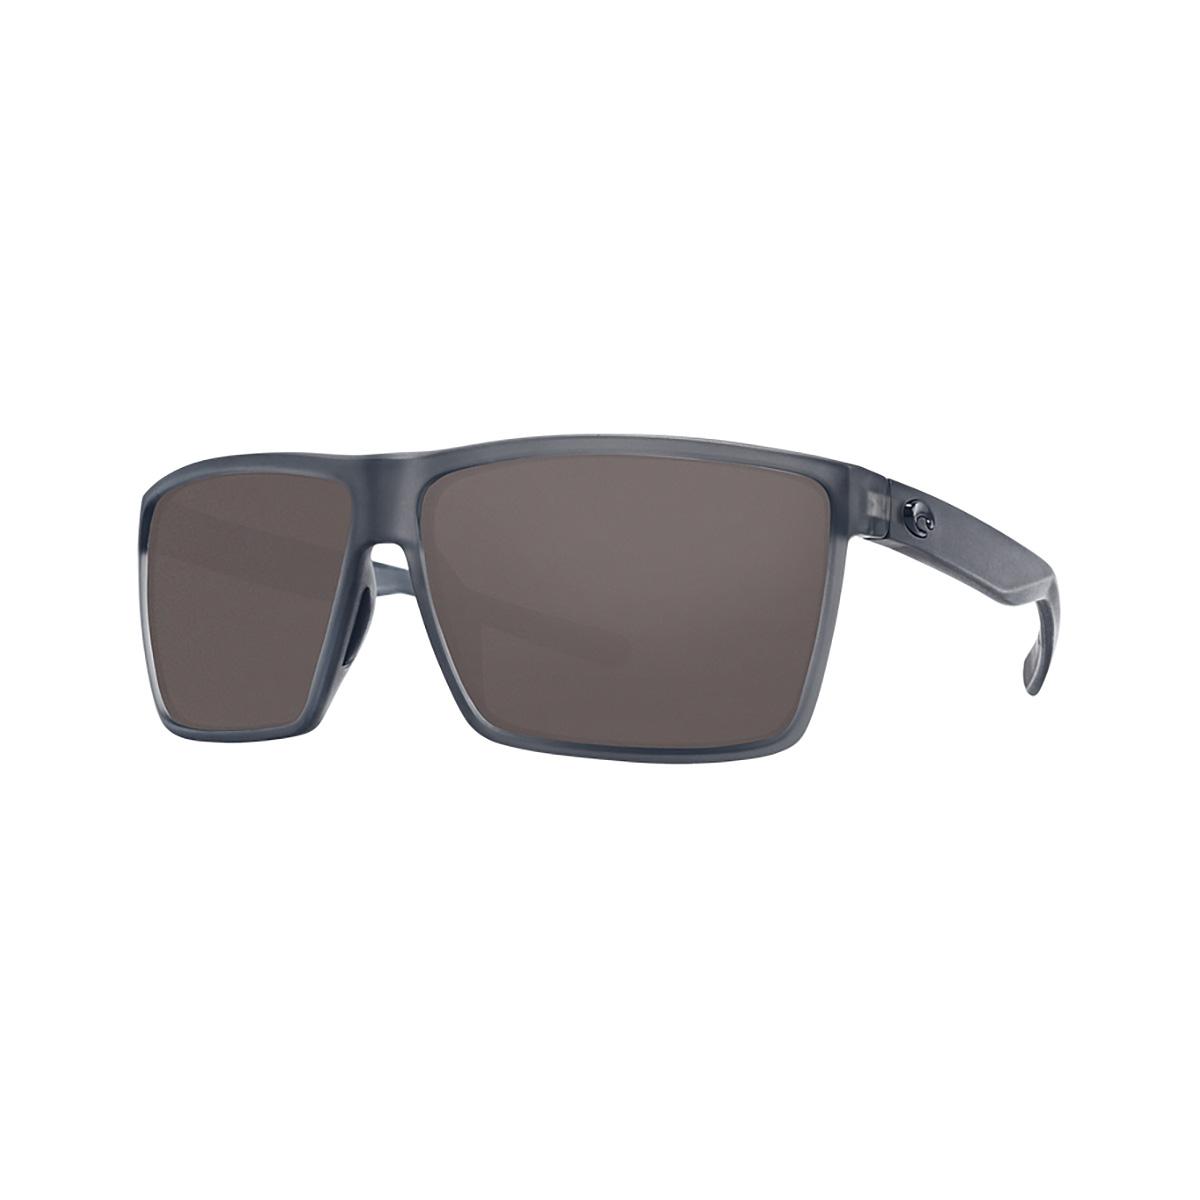  Rincon 580g Sunglasses - Polarized Glass